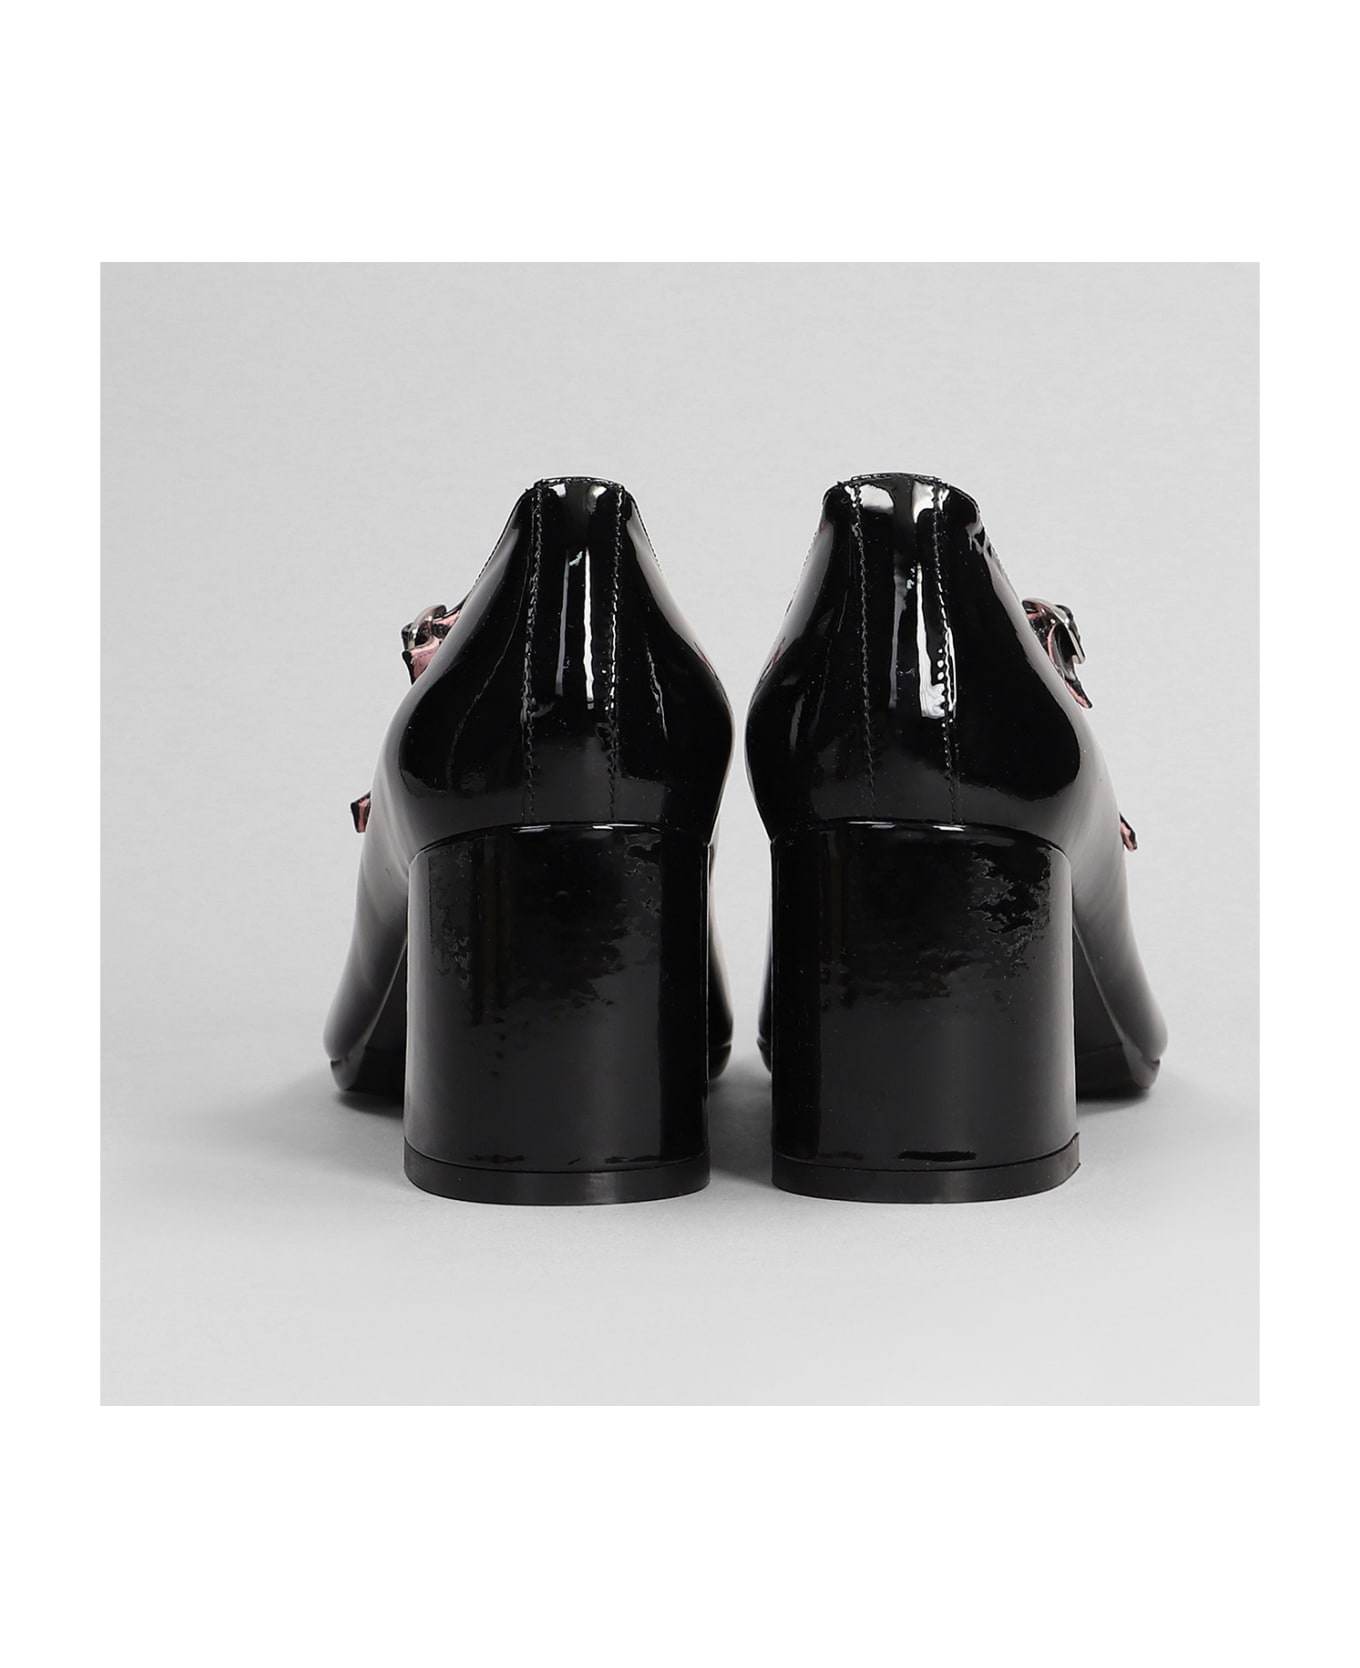 Carel Alice Pumps In Black Patent Leather - black